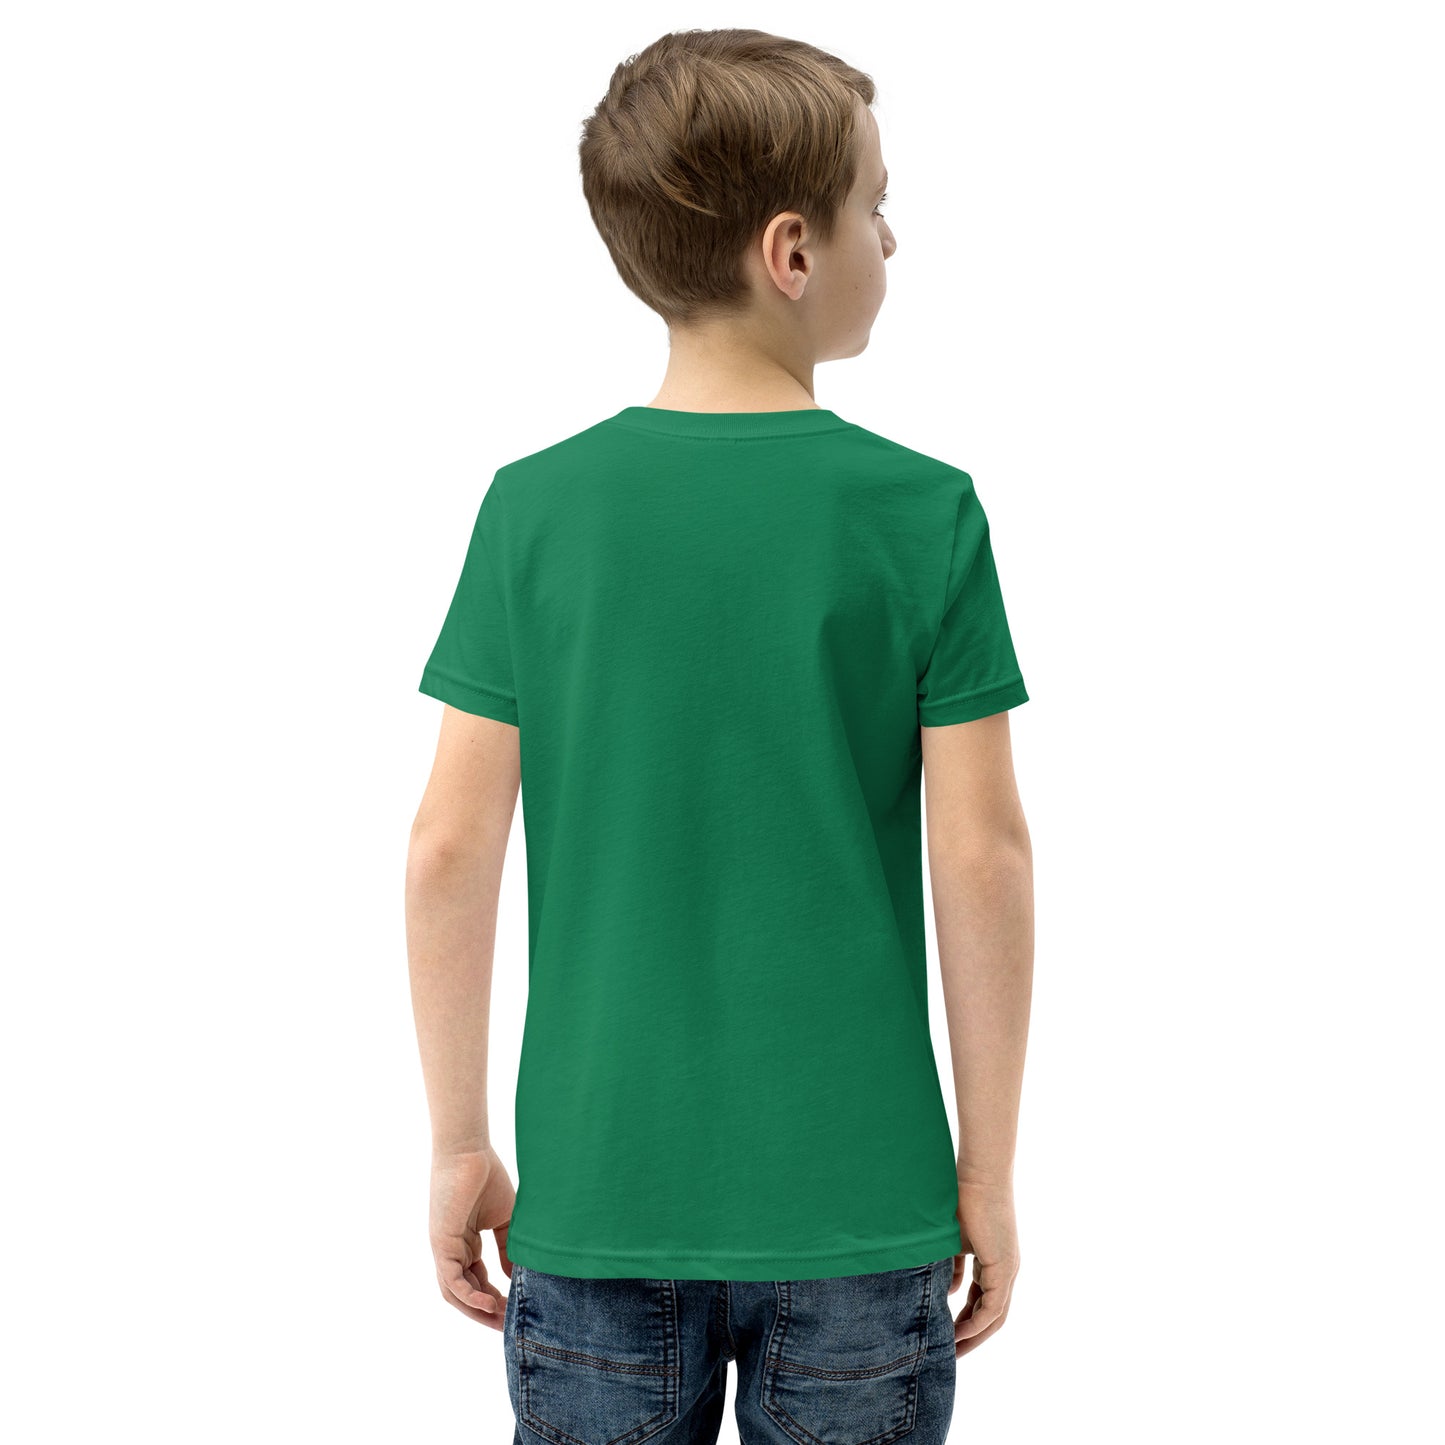 Supercalifragilisticexpialidocious Kid's T-Shirt